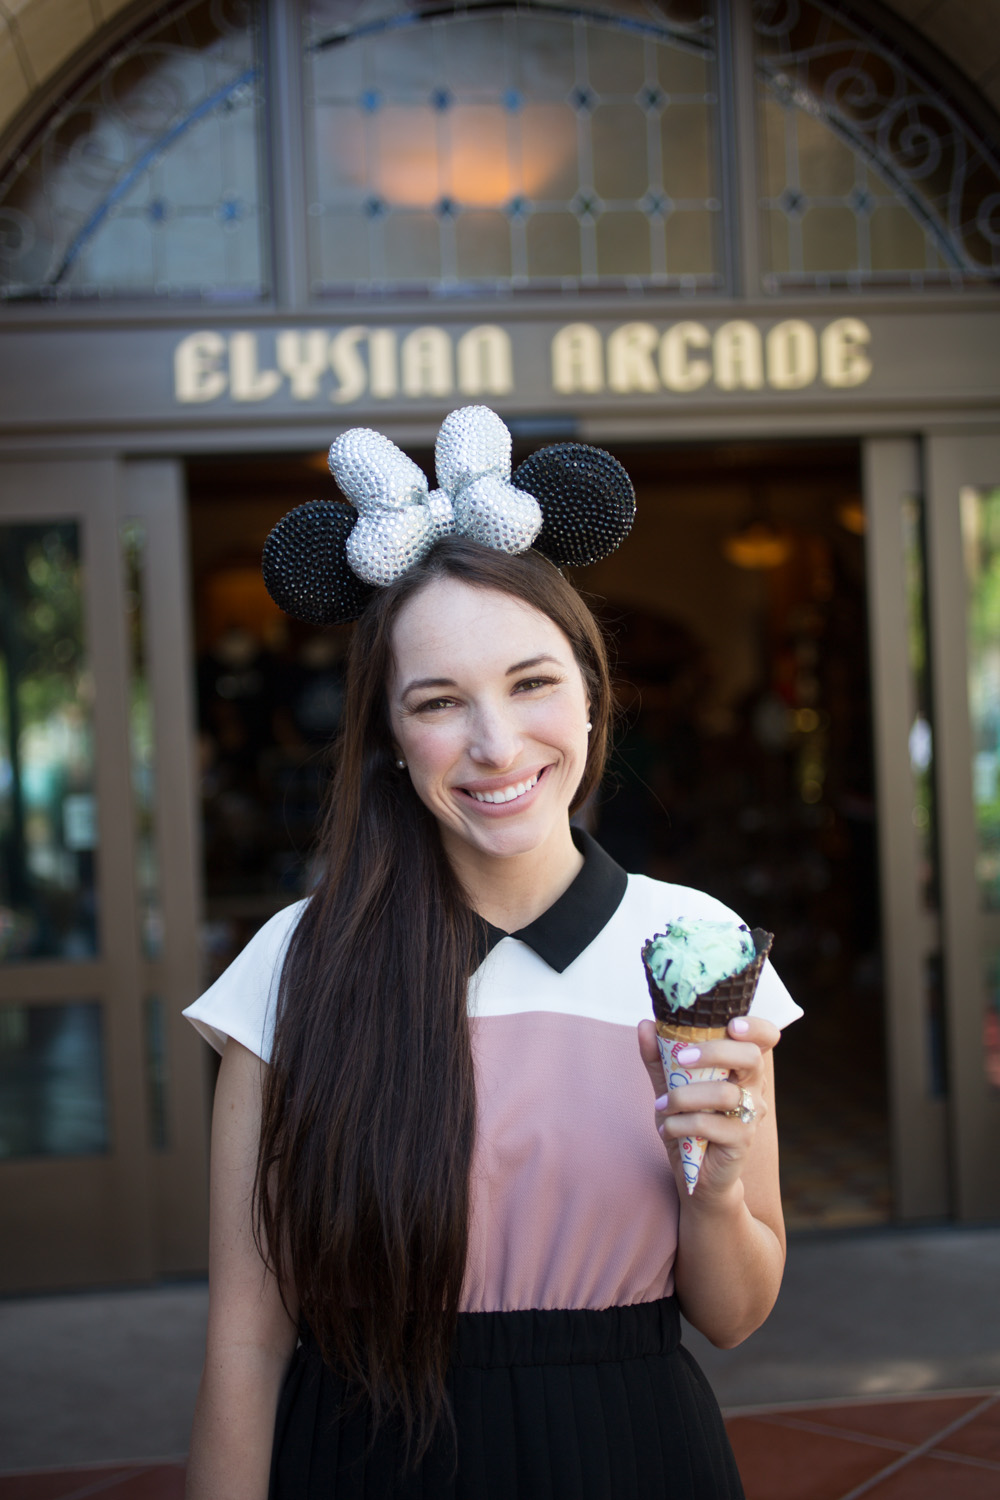 Disneyland Food Blog- Ice Cream Cone Review